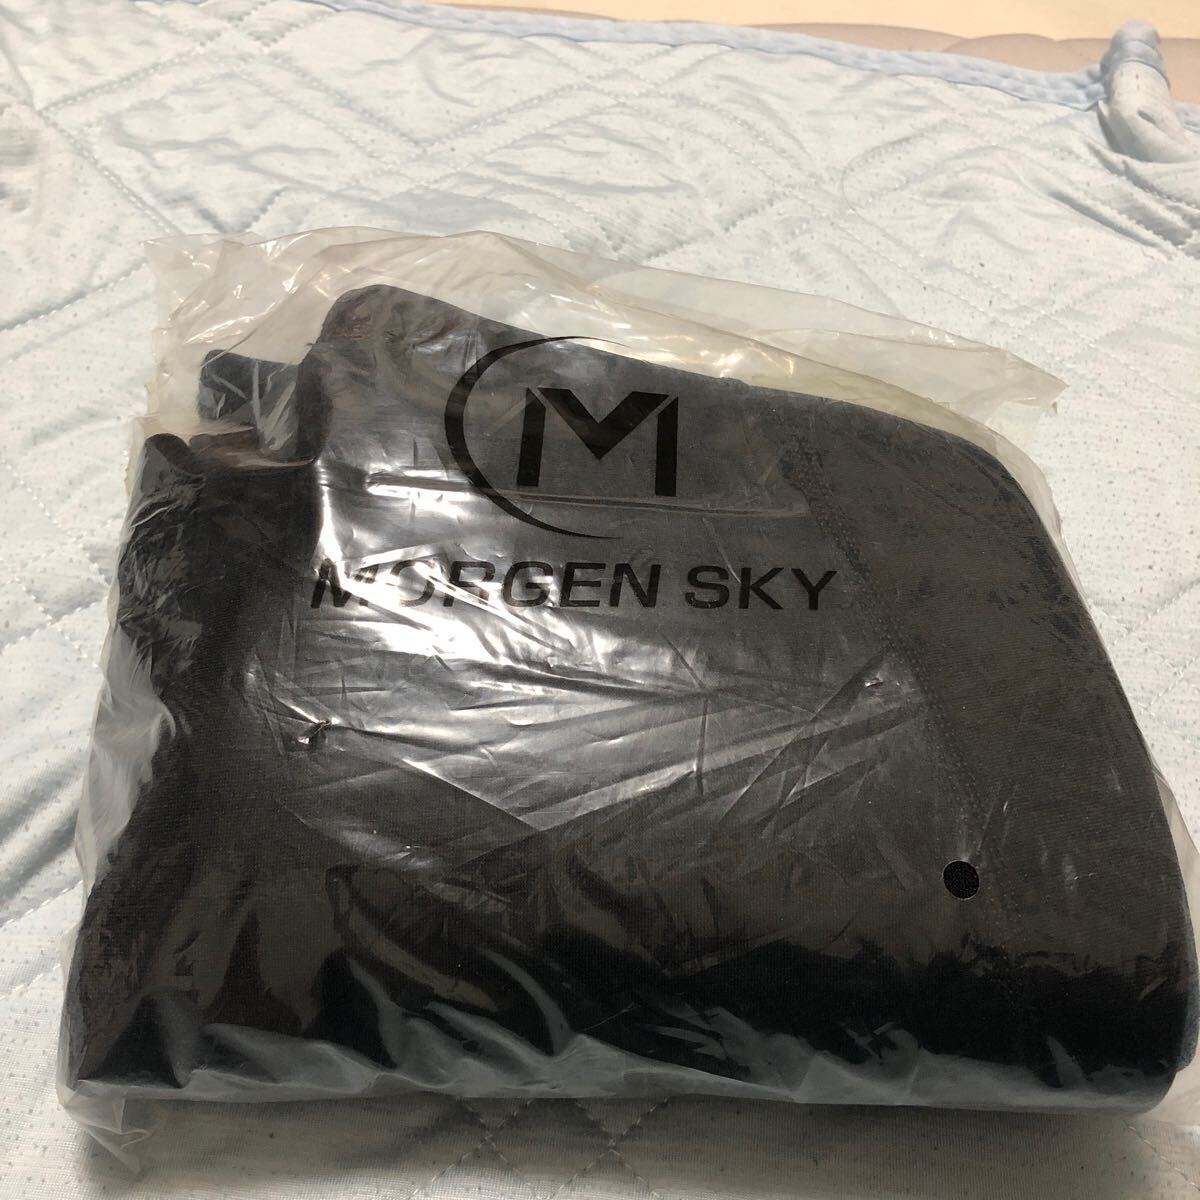 MORGEN SKY ウェットスーツ ショートパンツ メンズ 2mm ボレロ ウェットパンツ ネオプレーン生地 サーフパンツ 海パン 速乾 水陸両用 